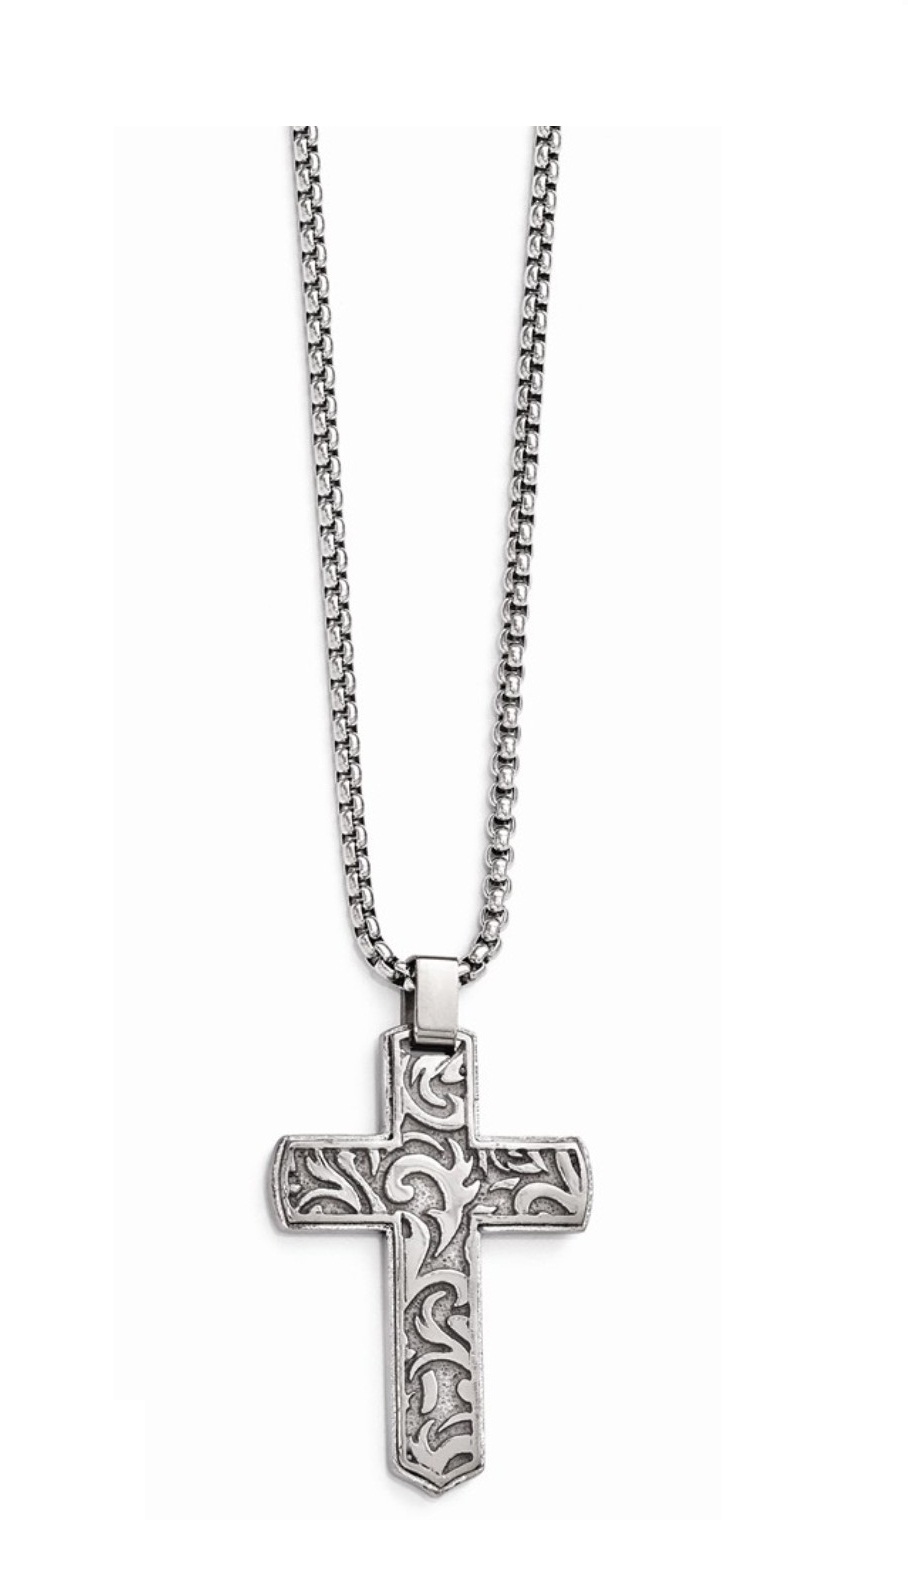  Titanium Casted Cross Pendant Necklace, 20